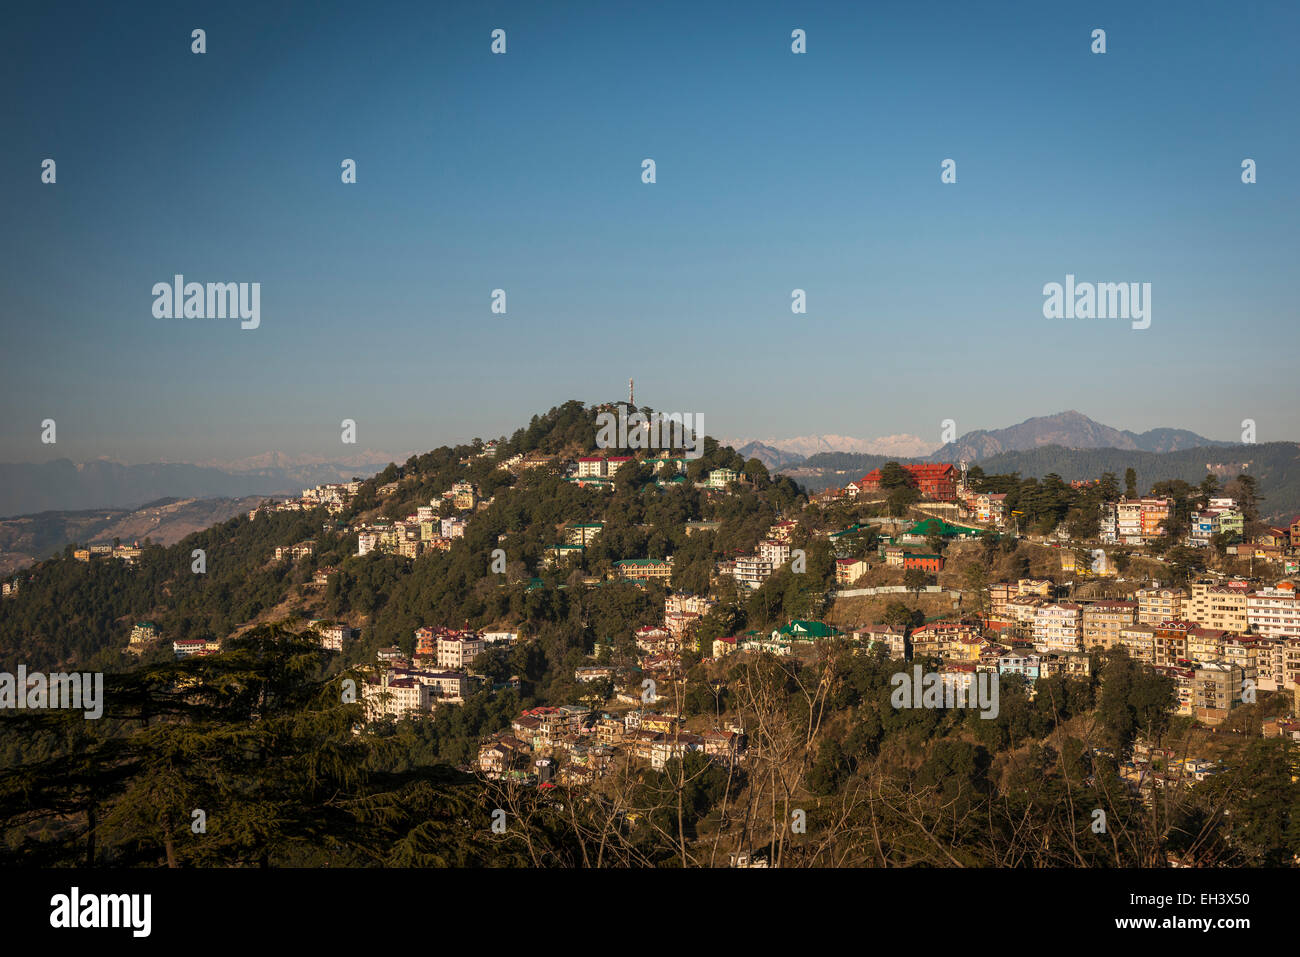 View from The Ridge, Shimla, Himachal Pradesh, India Stock Photo